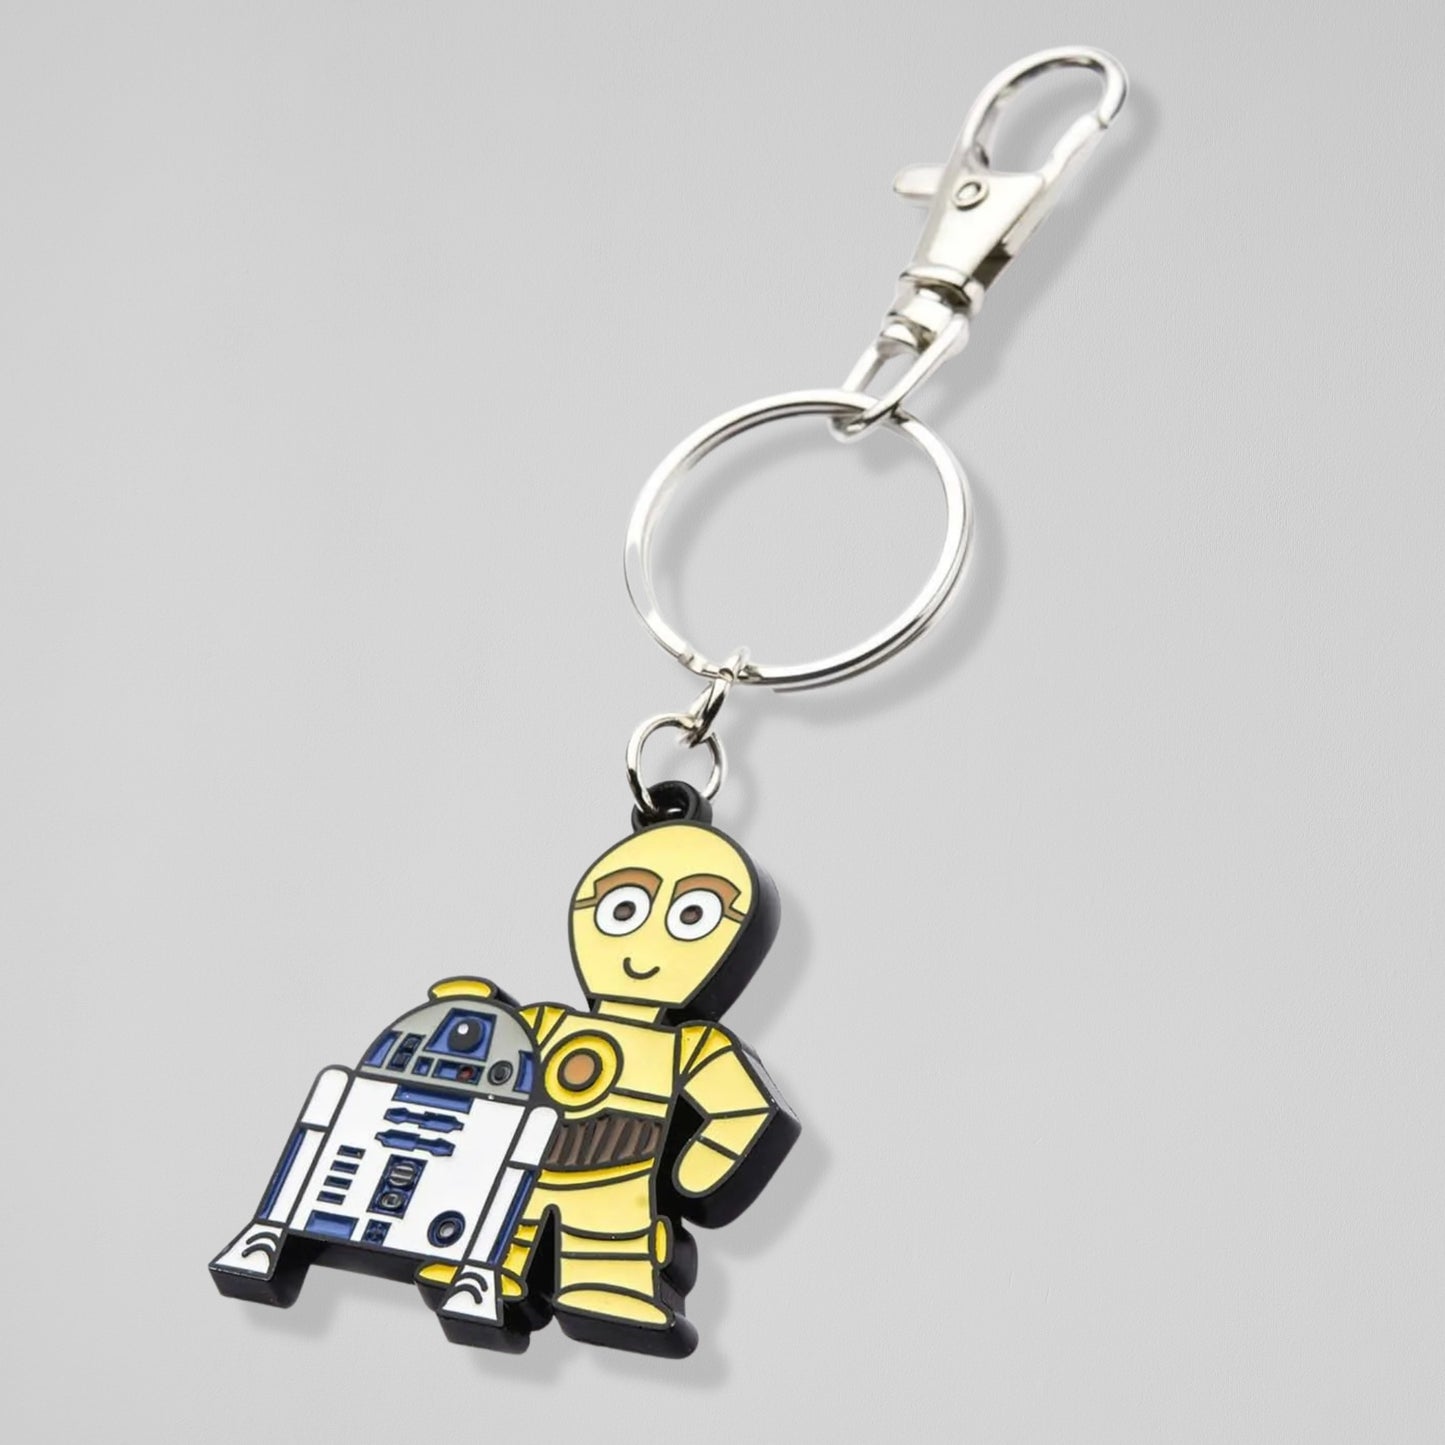 R2-D2 and C-3PO (Star Wars) Metal Keychain